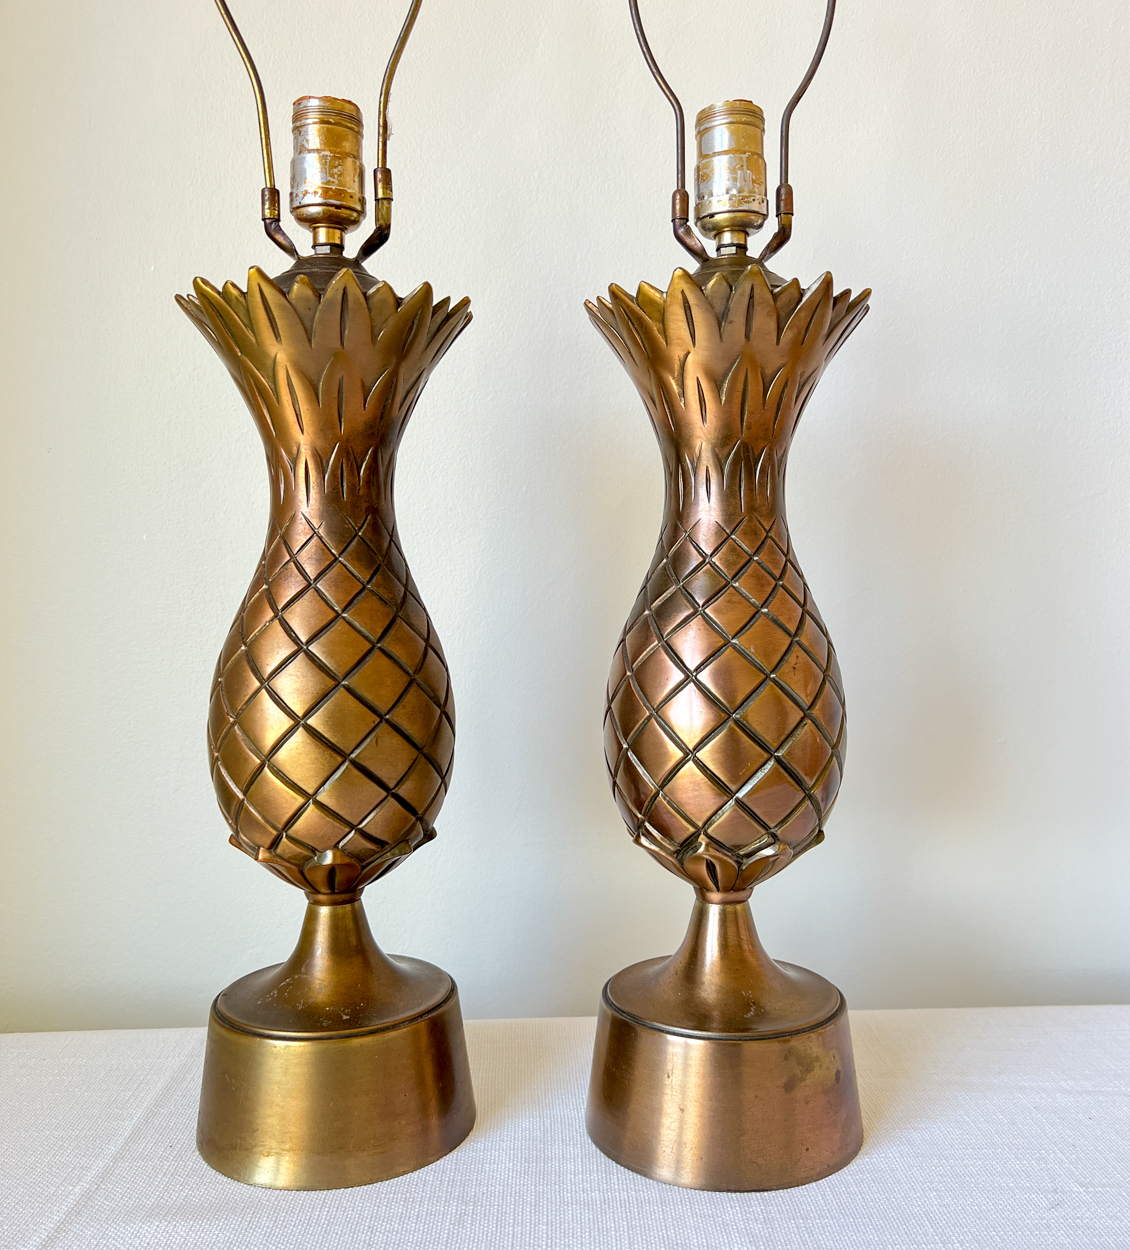 Contemporary Brass Pineapple Motif Chandelier